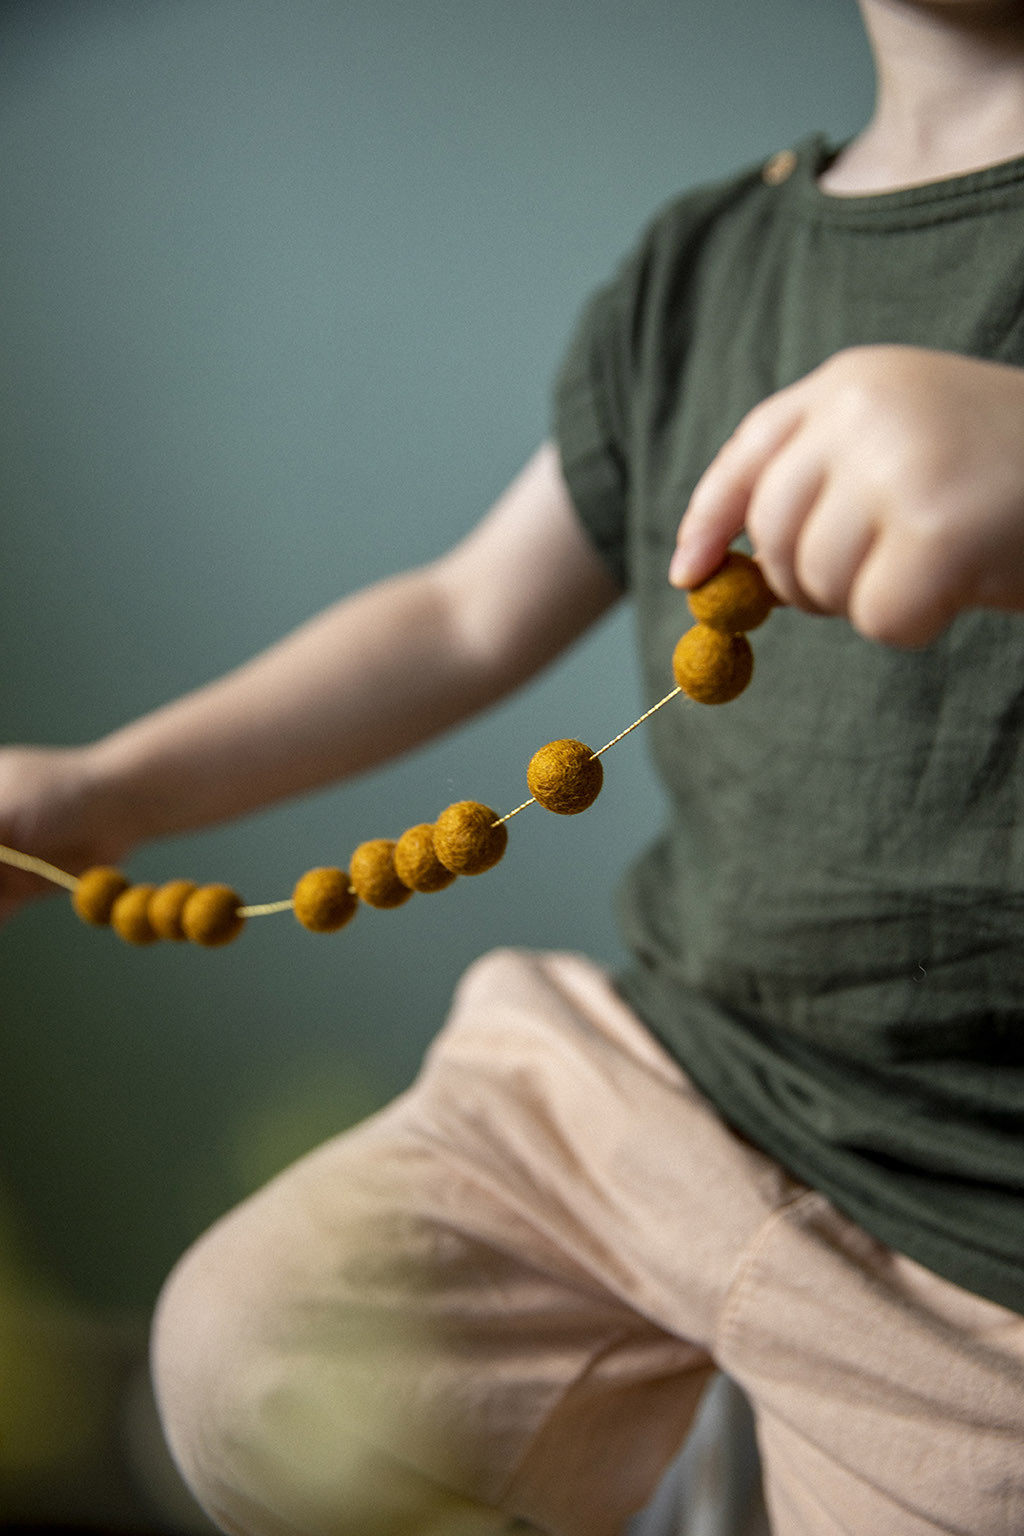 Felt pompons on a golden thread to create a playful garland